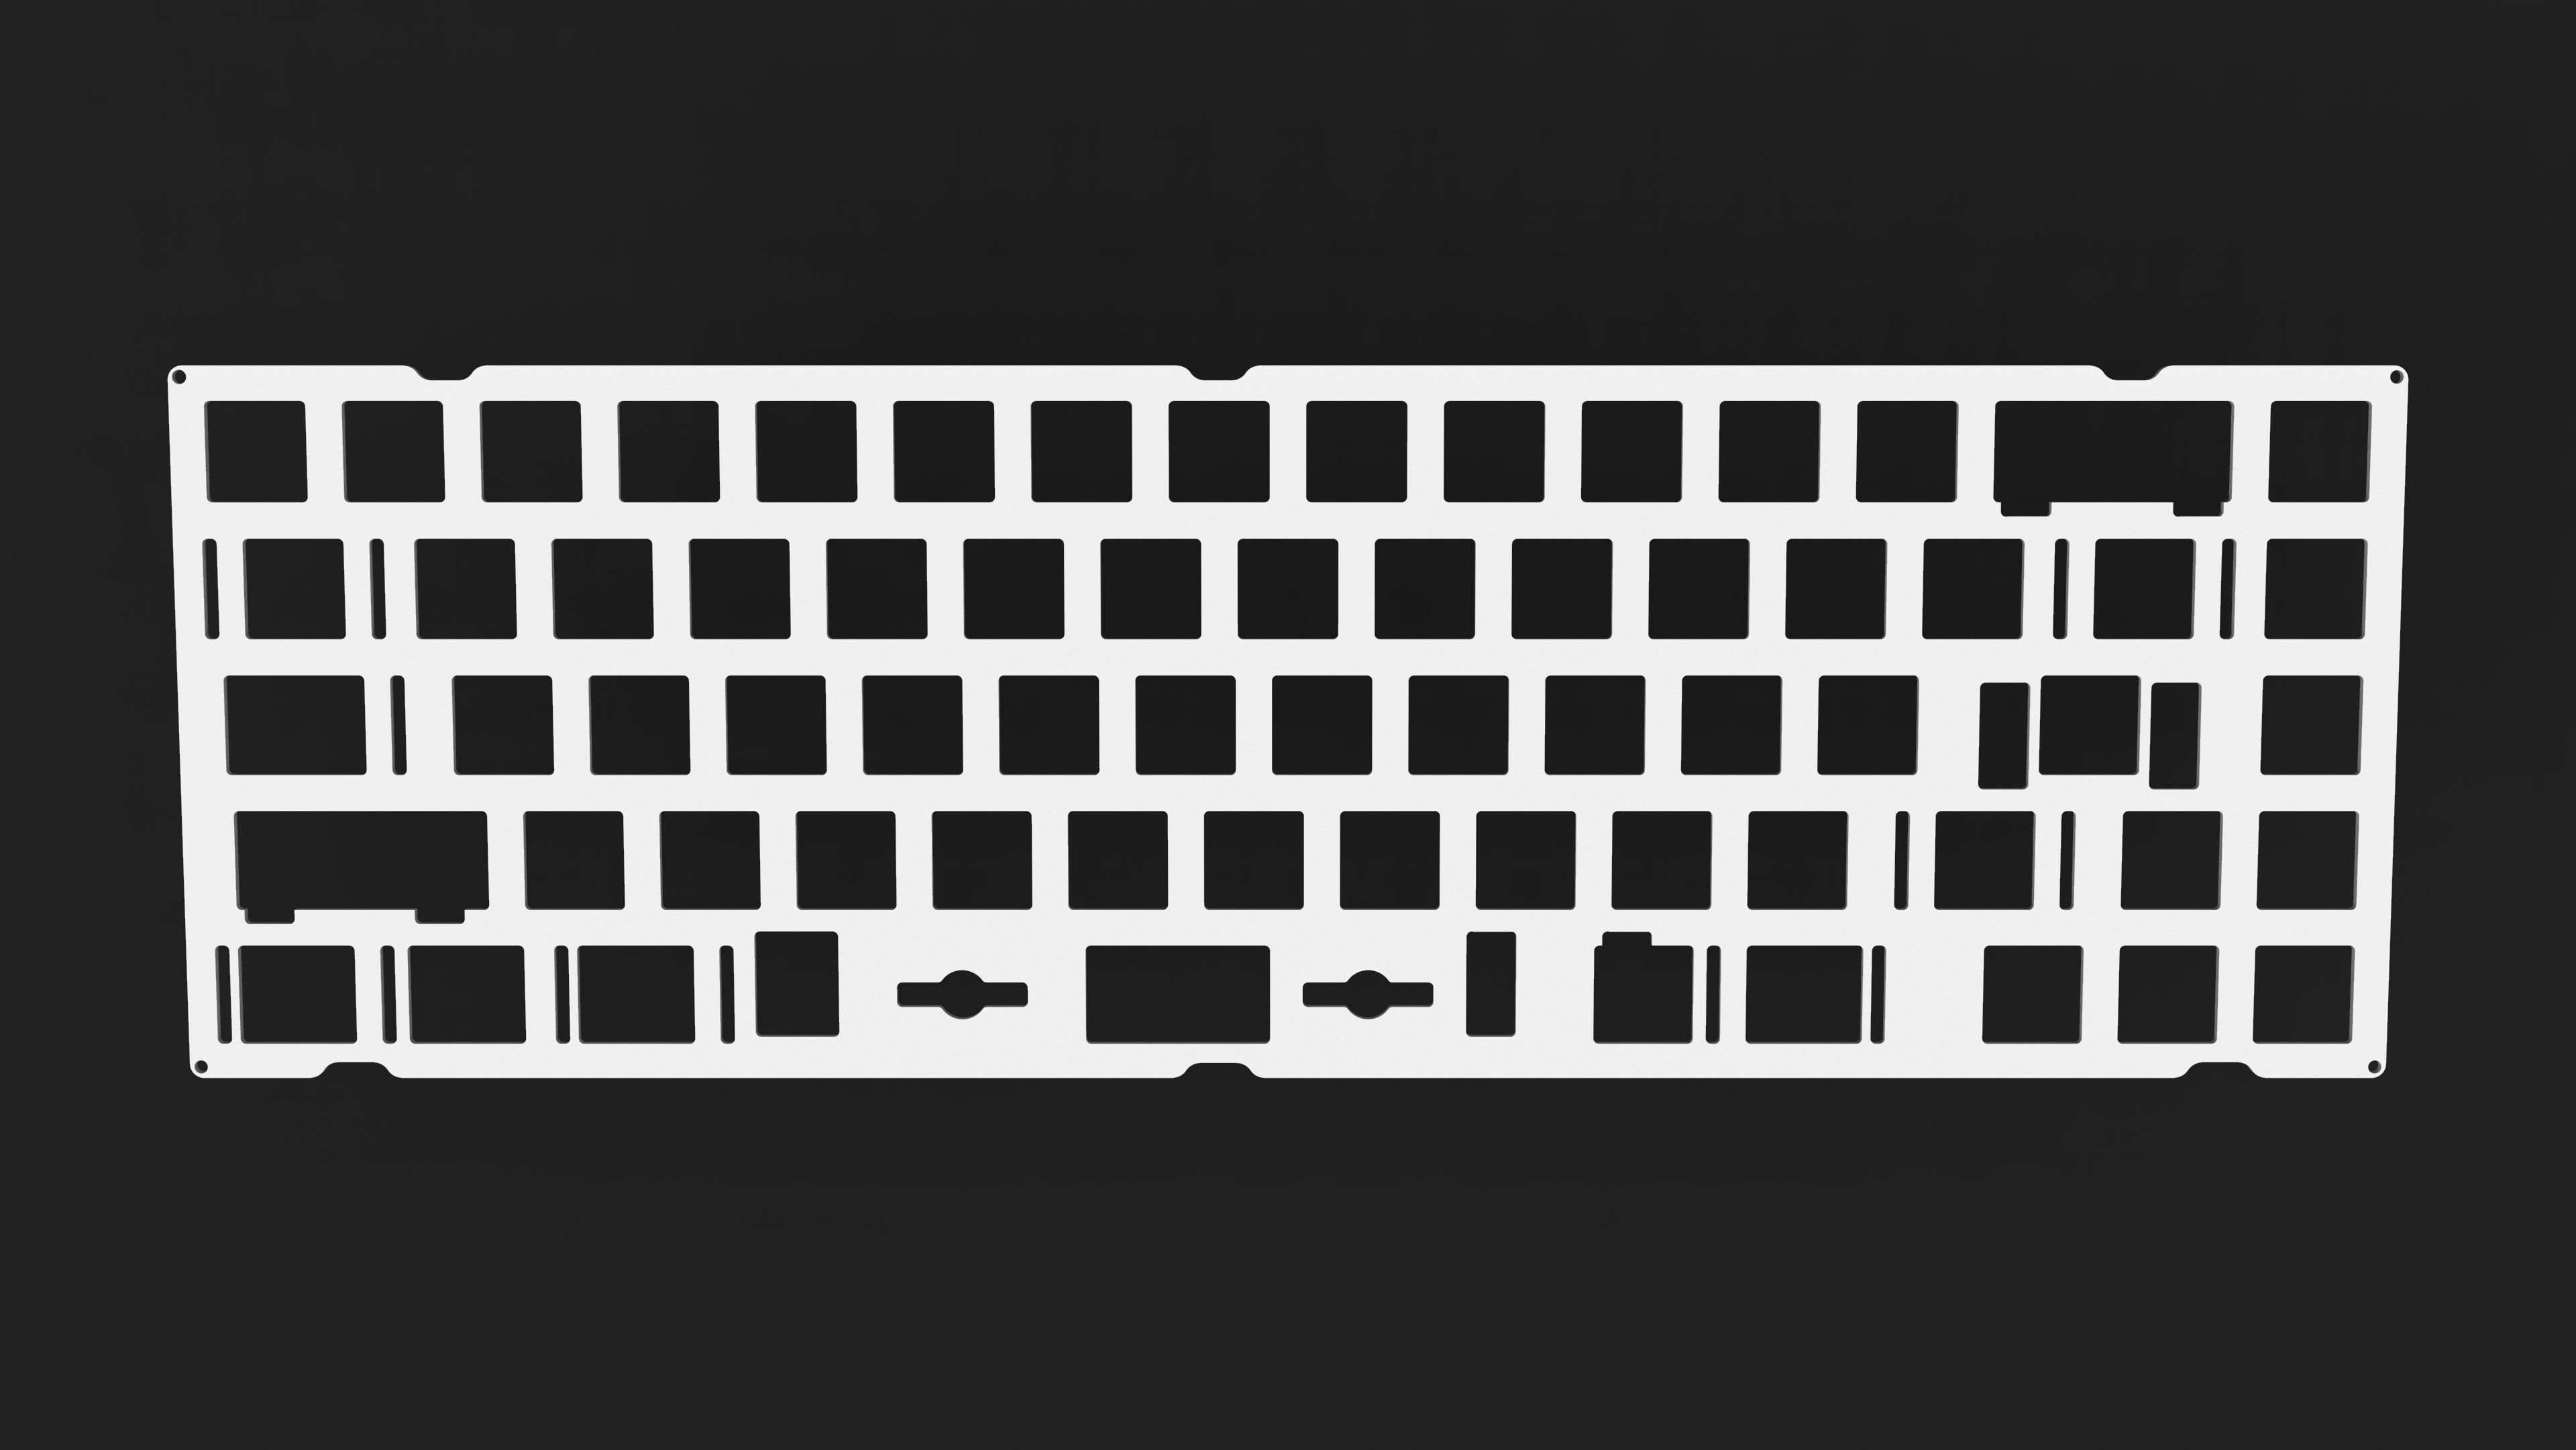 Angel 65% Keyboard